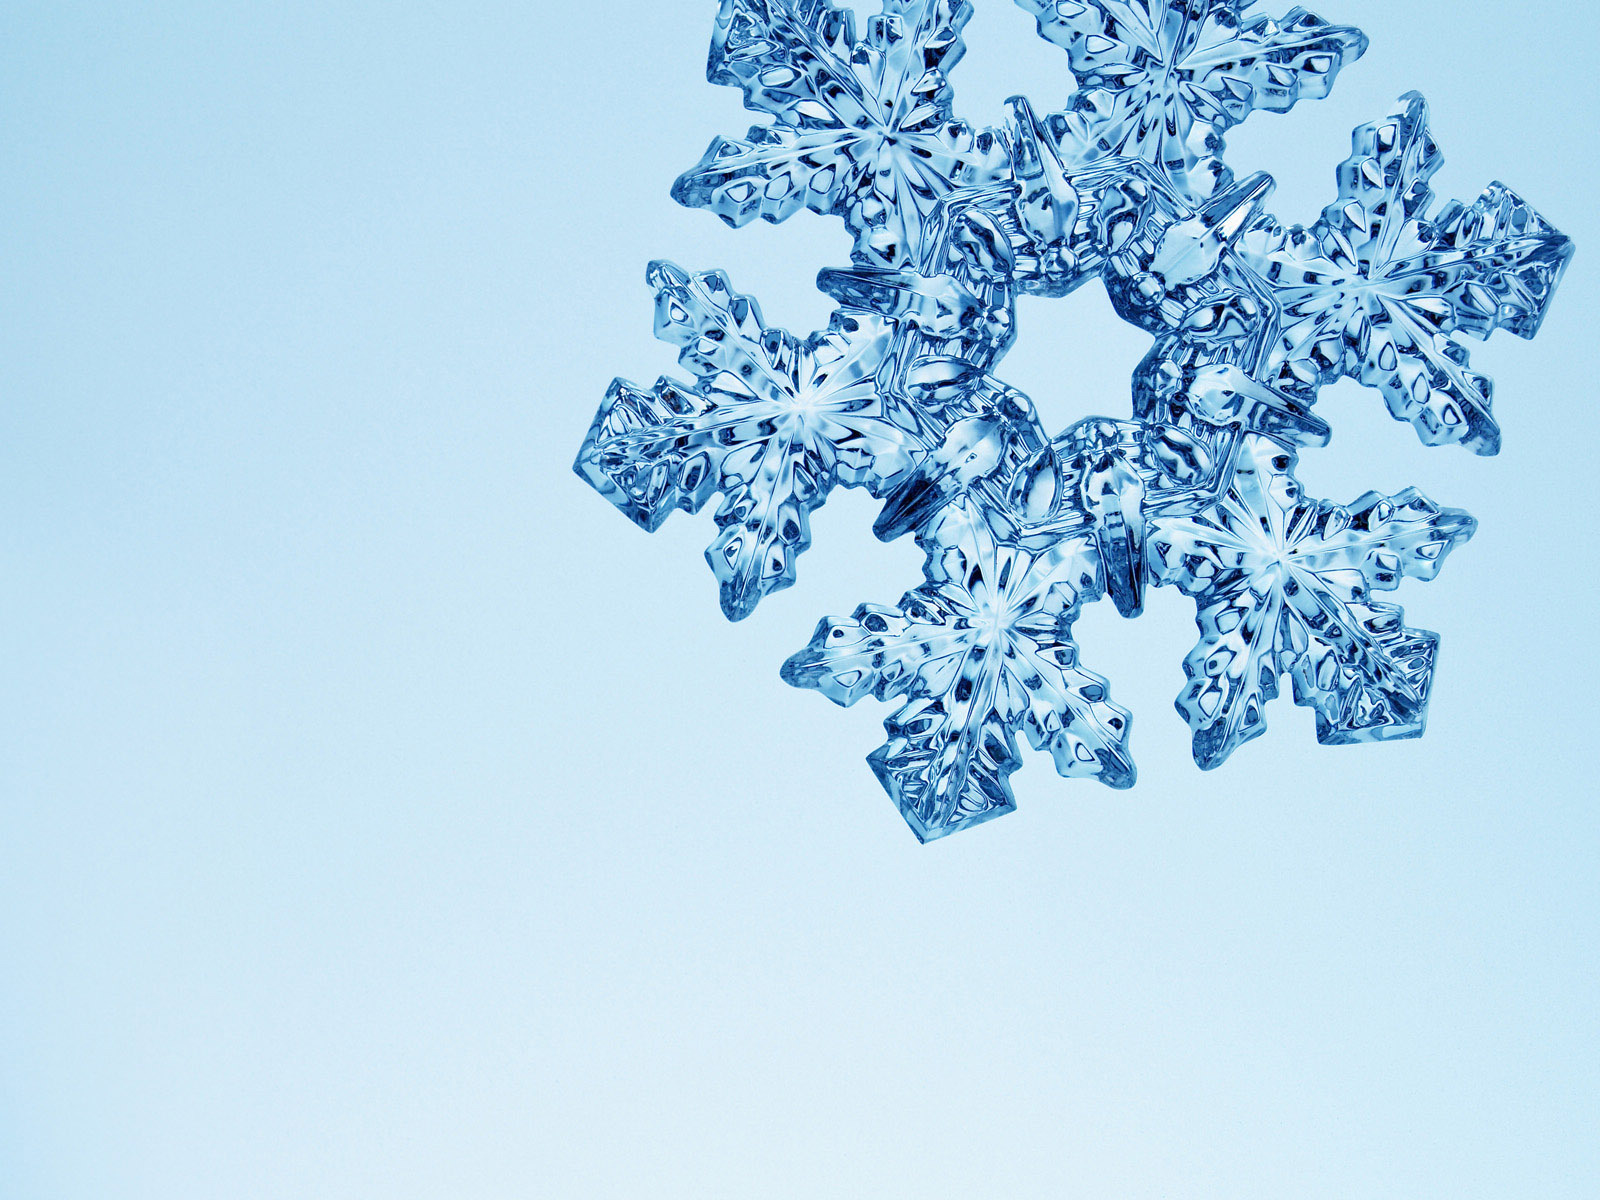 Exquisite Snowflake Wallpaper Patterns Background Bright